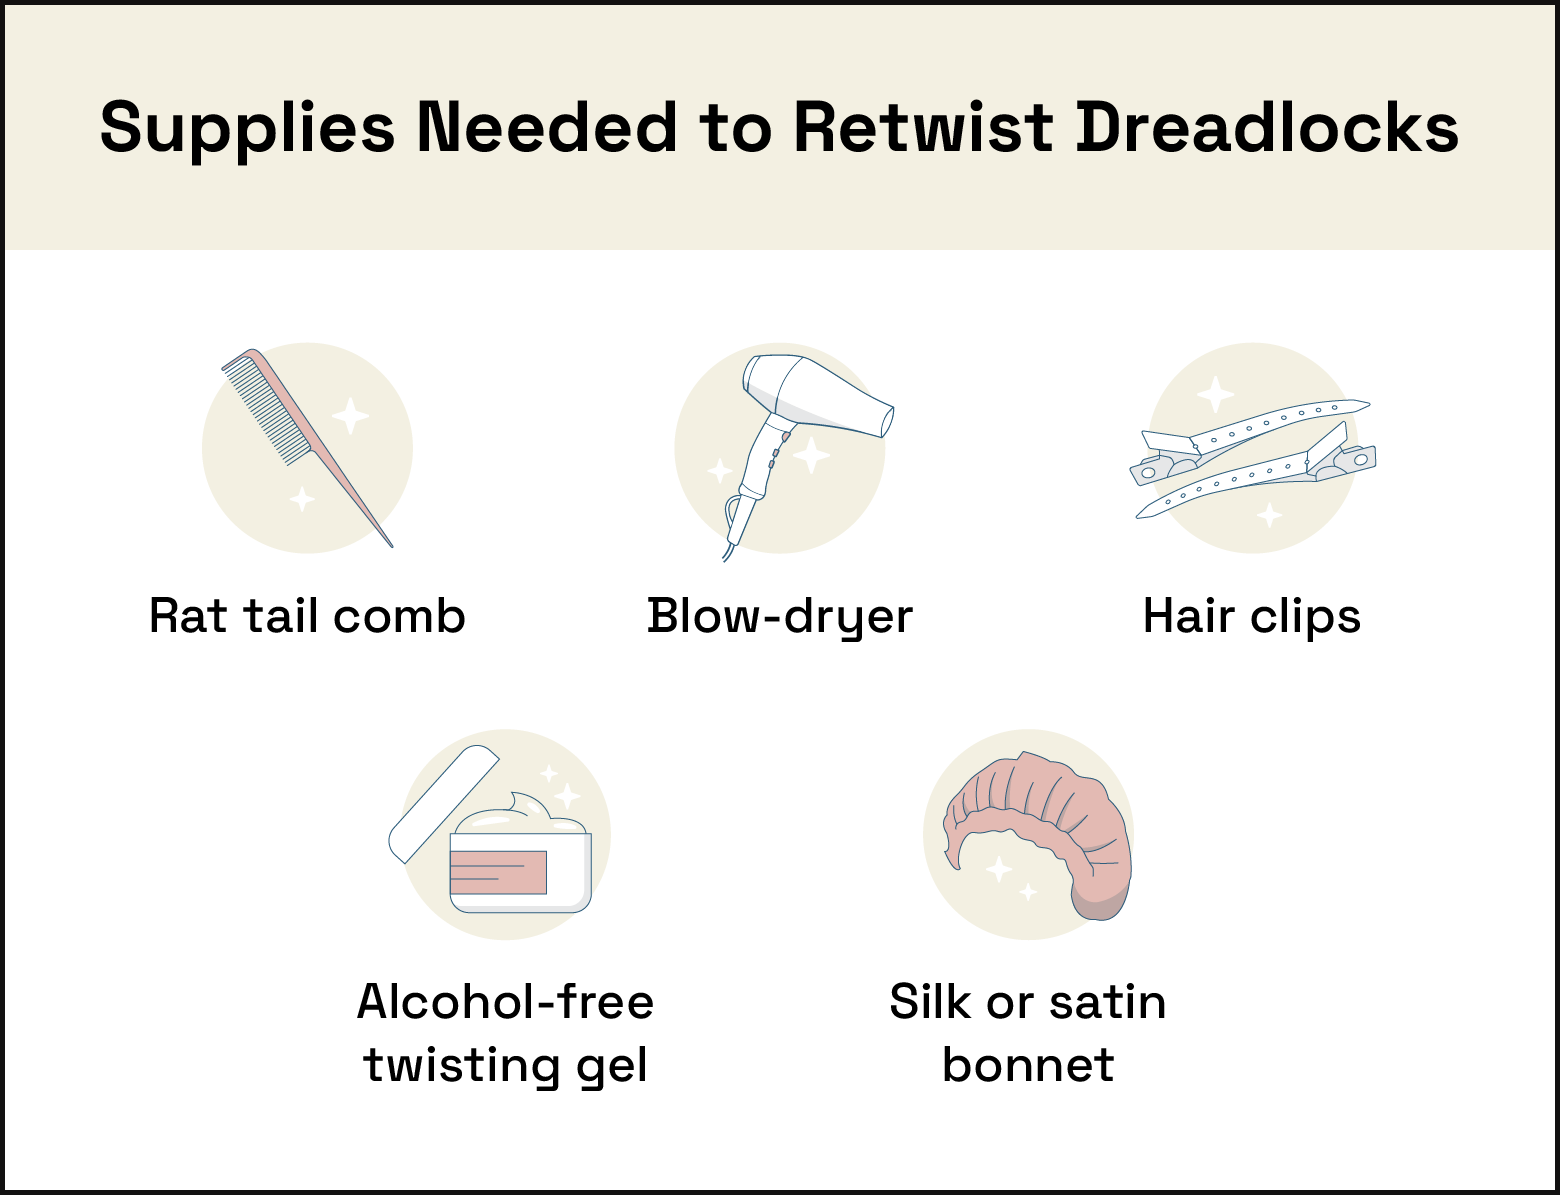 illustration of supplies needed to retwist dreadlocks: rat tail comb, blow dryer, hair clips, alcohol-free twisting gel, silk or satin bonnet